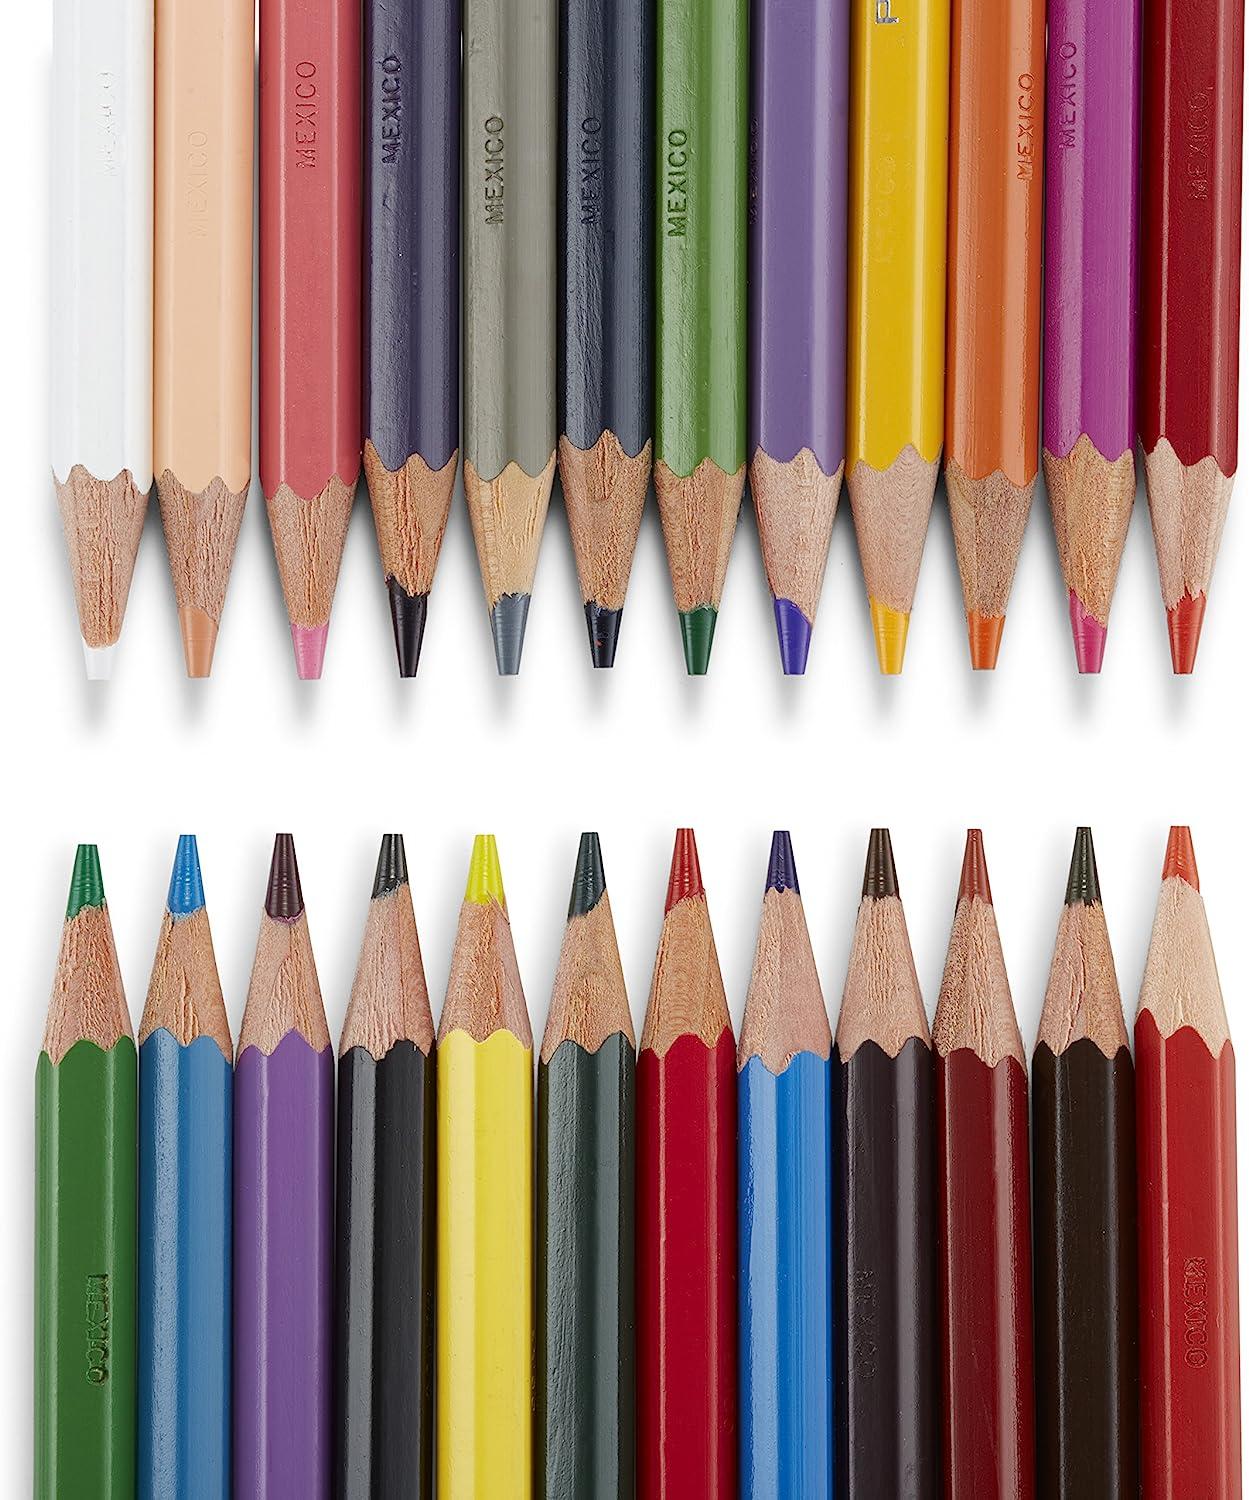 Prismacolor Col-erase Erasable Colored Pencil, 24 Vivid, Erasable Colors  (20517), For Illustrating, Animating, Art Supplies - Wooden Colored Pencils  - AliExpress